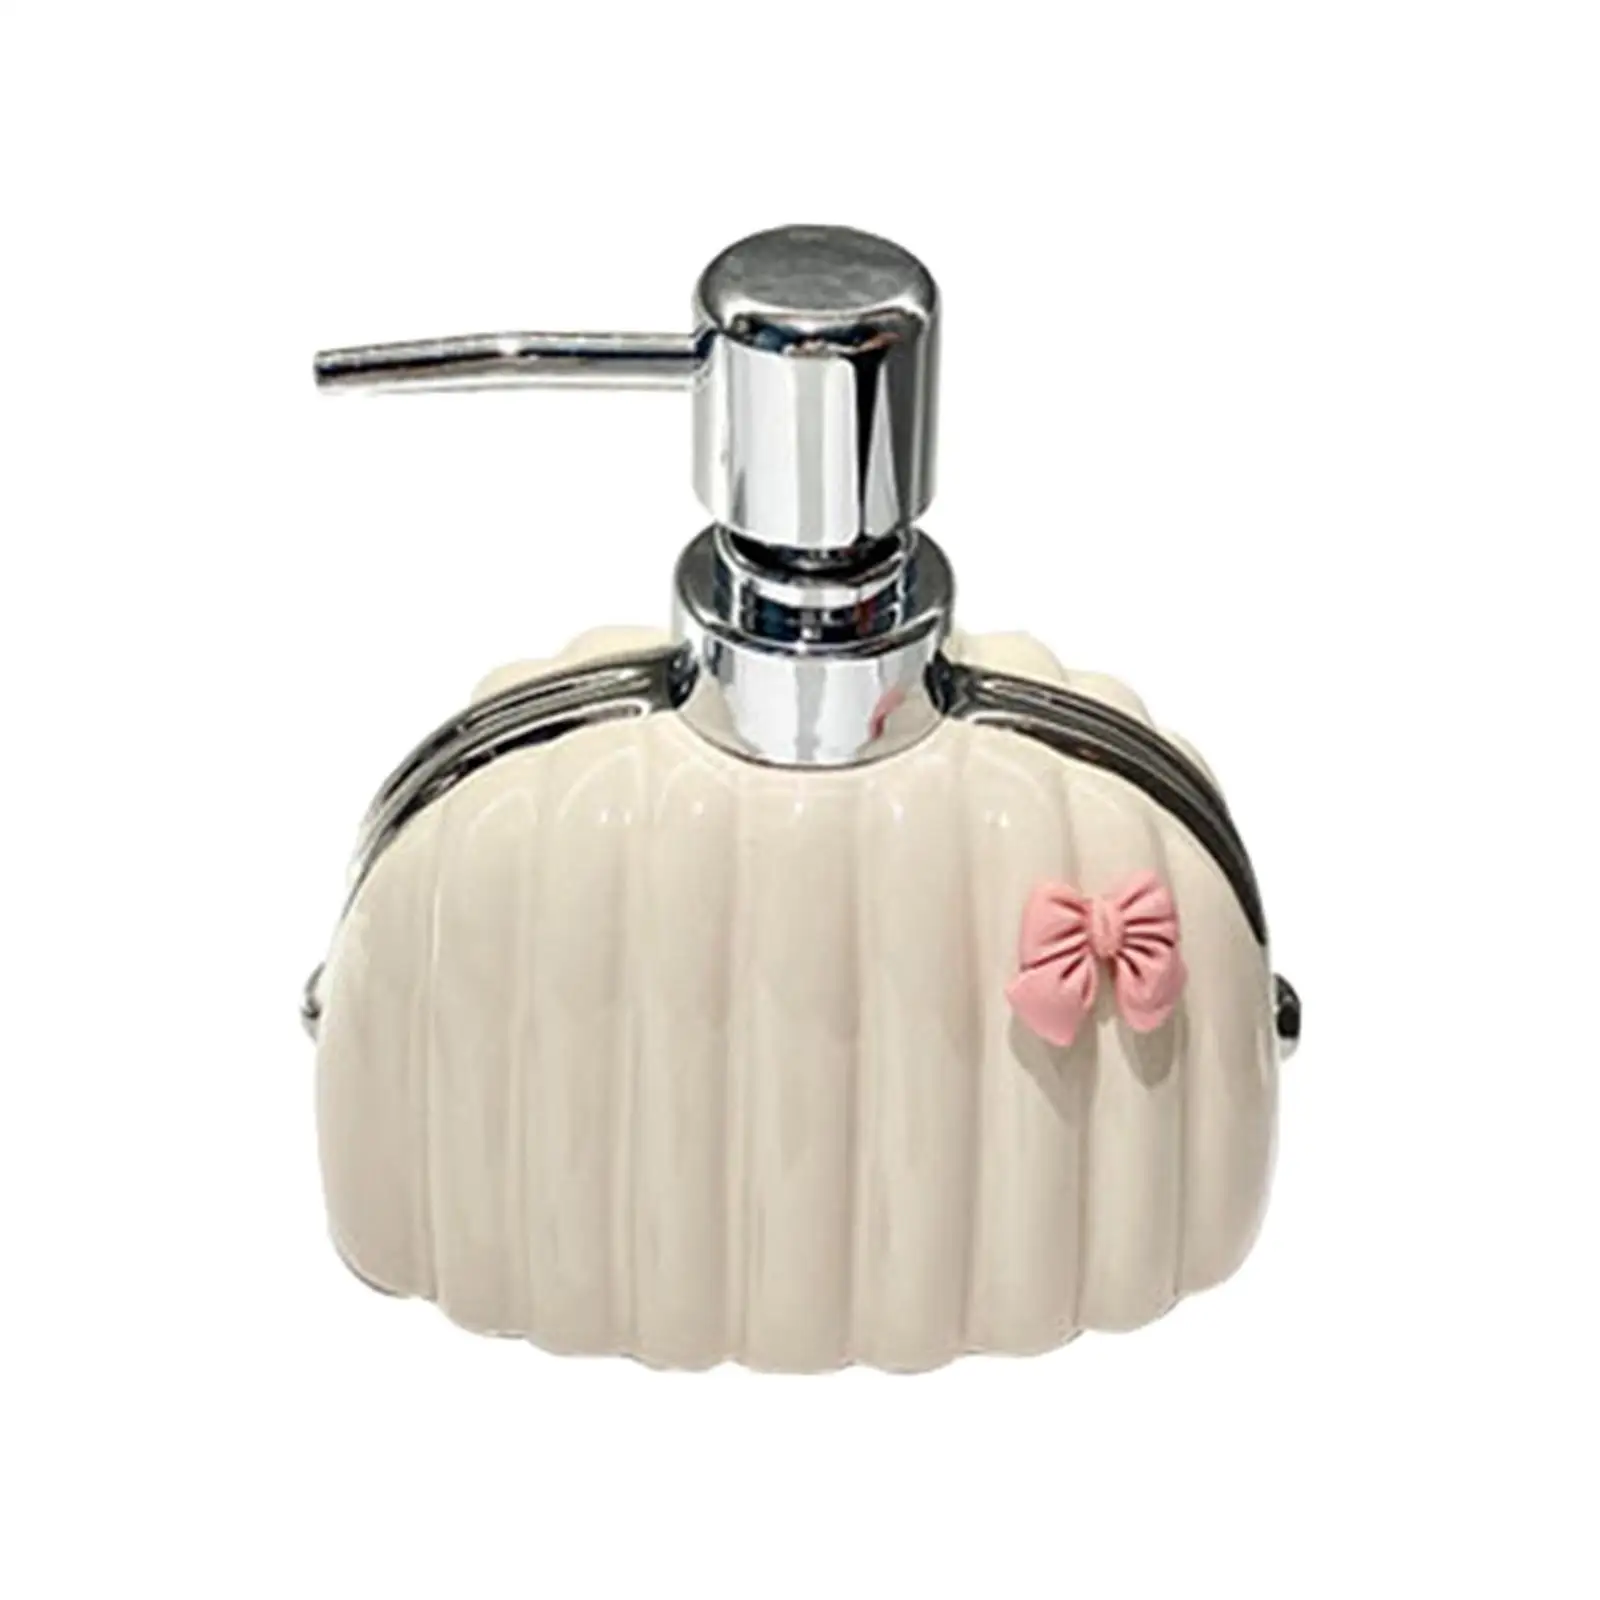 Porcelain Lotion Dispenser with Pump Hand Soap Dispenser Minimalist White Ceramic Lotion Bottle for Bathroom Bedroom Decor